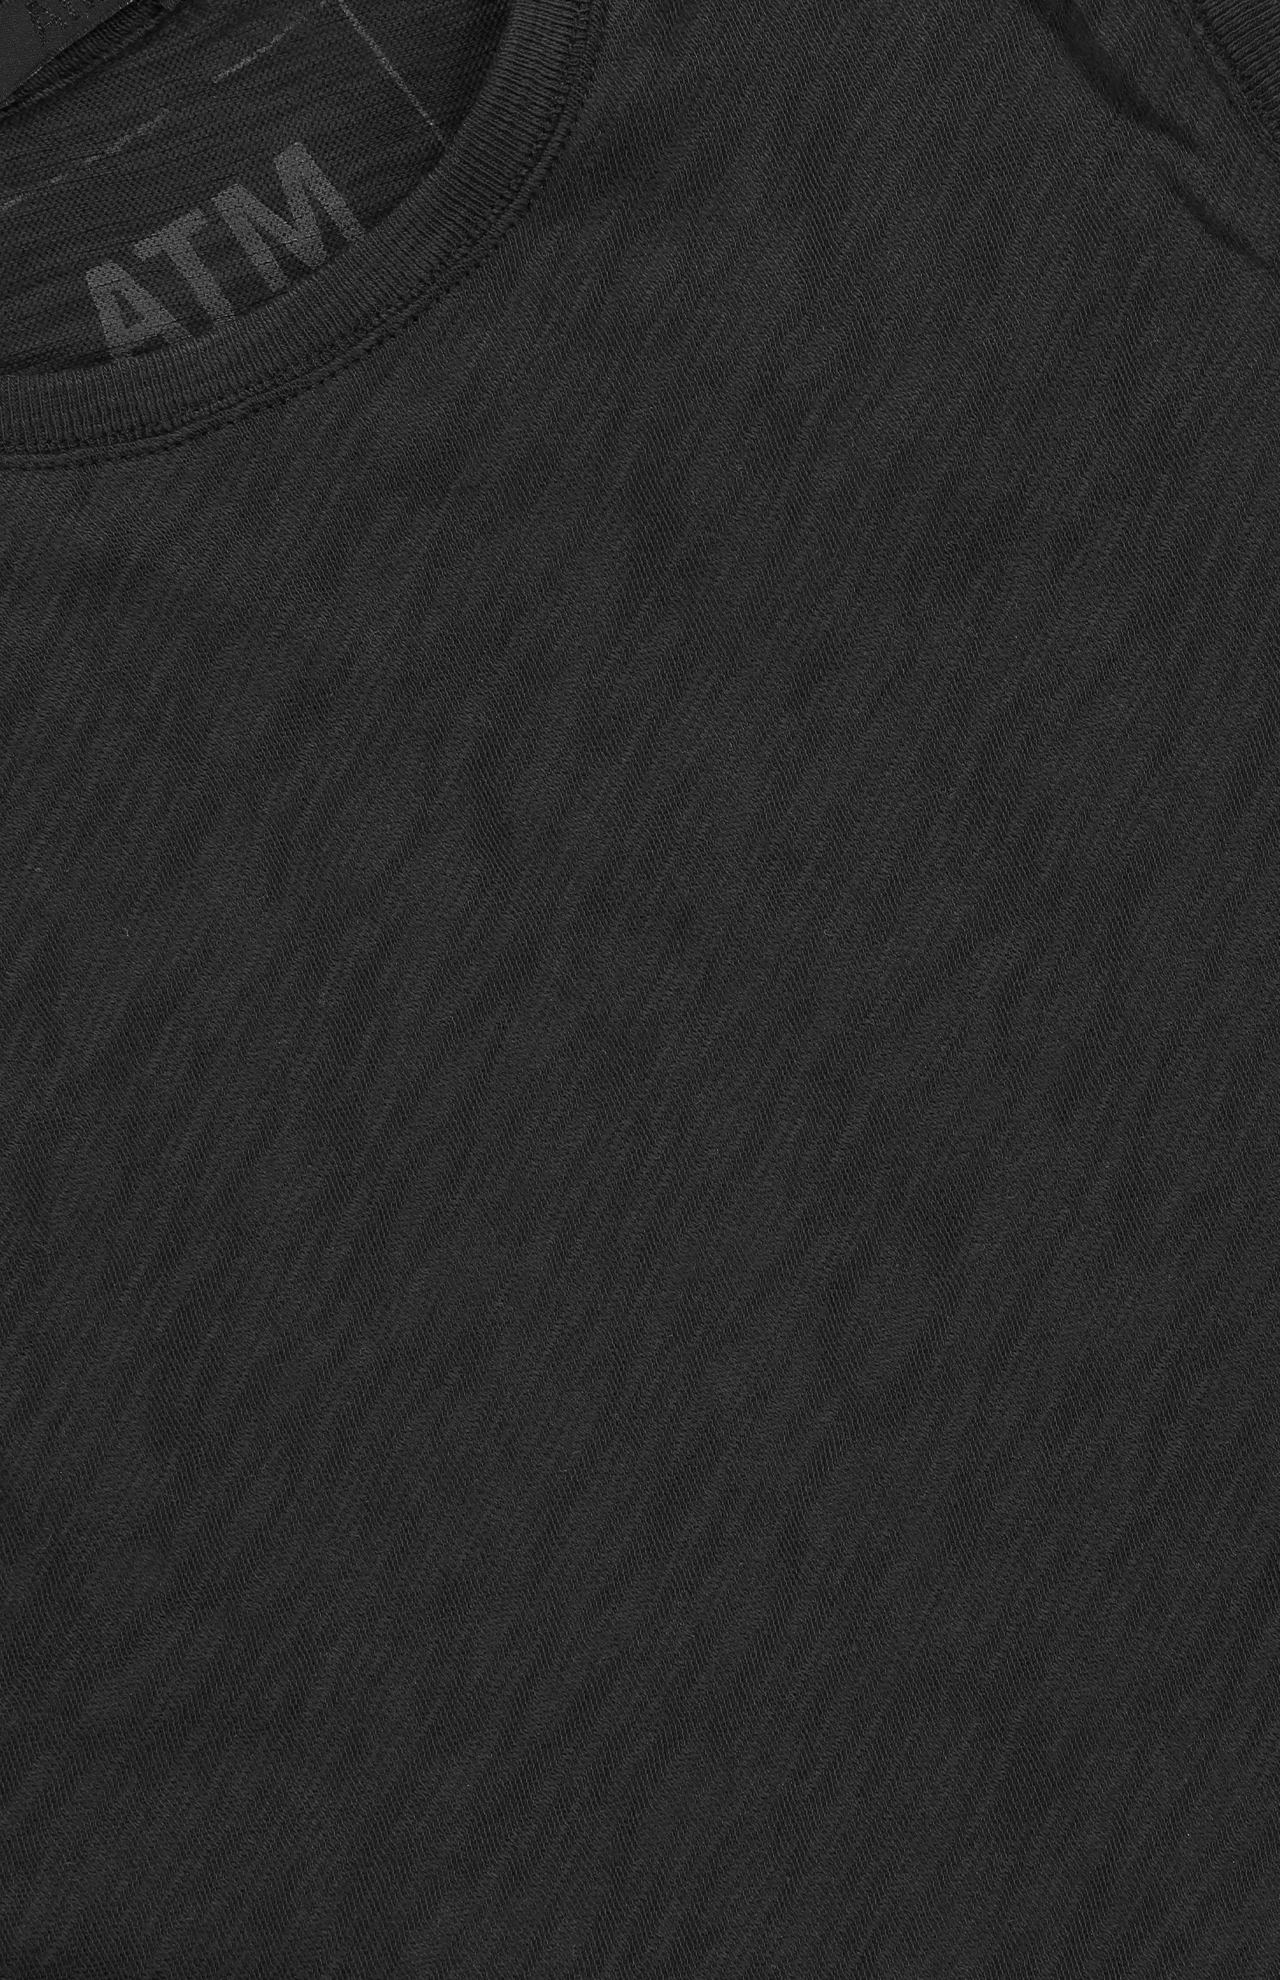 ATM Slub Jersey Sleeveless School Boy in Black - Collar Detail Image (6843940798579)